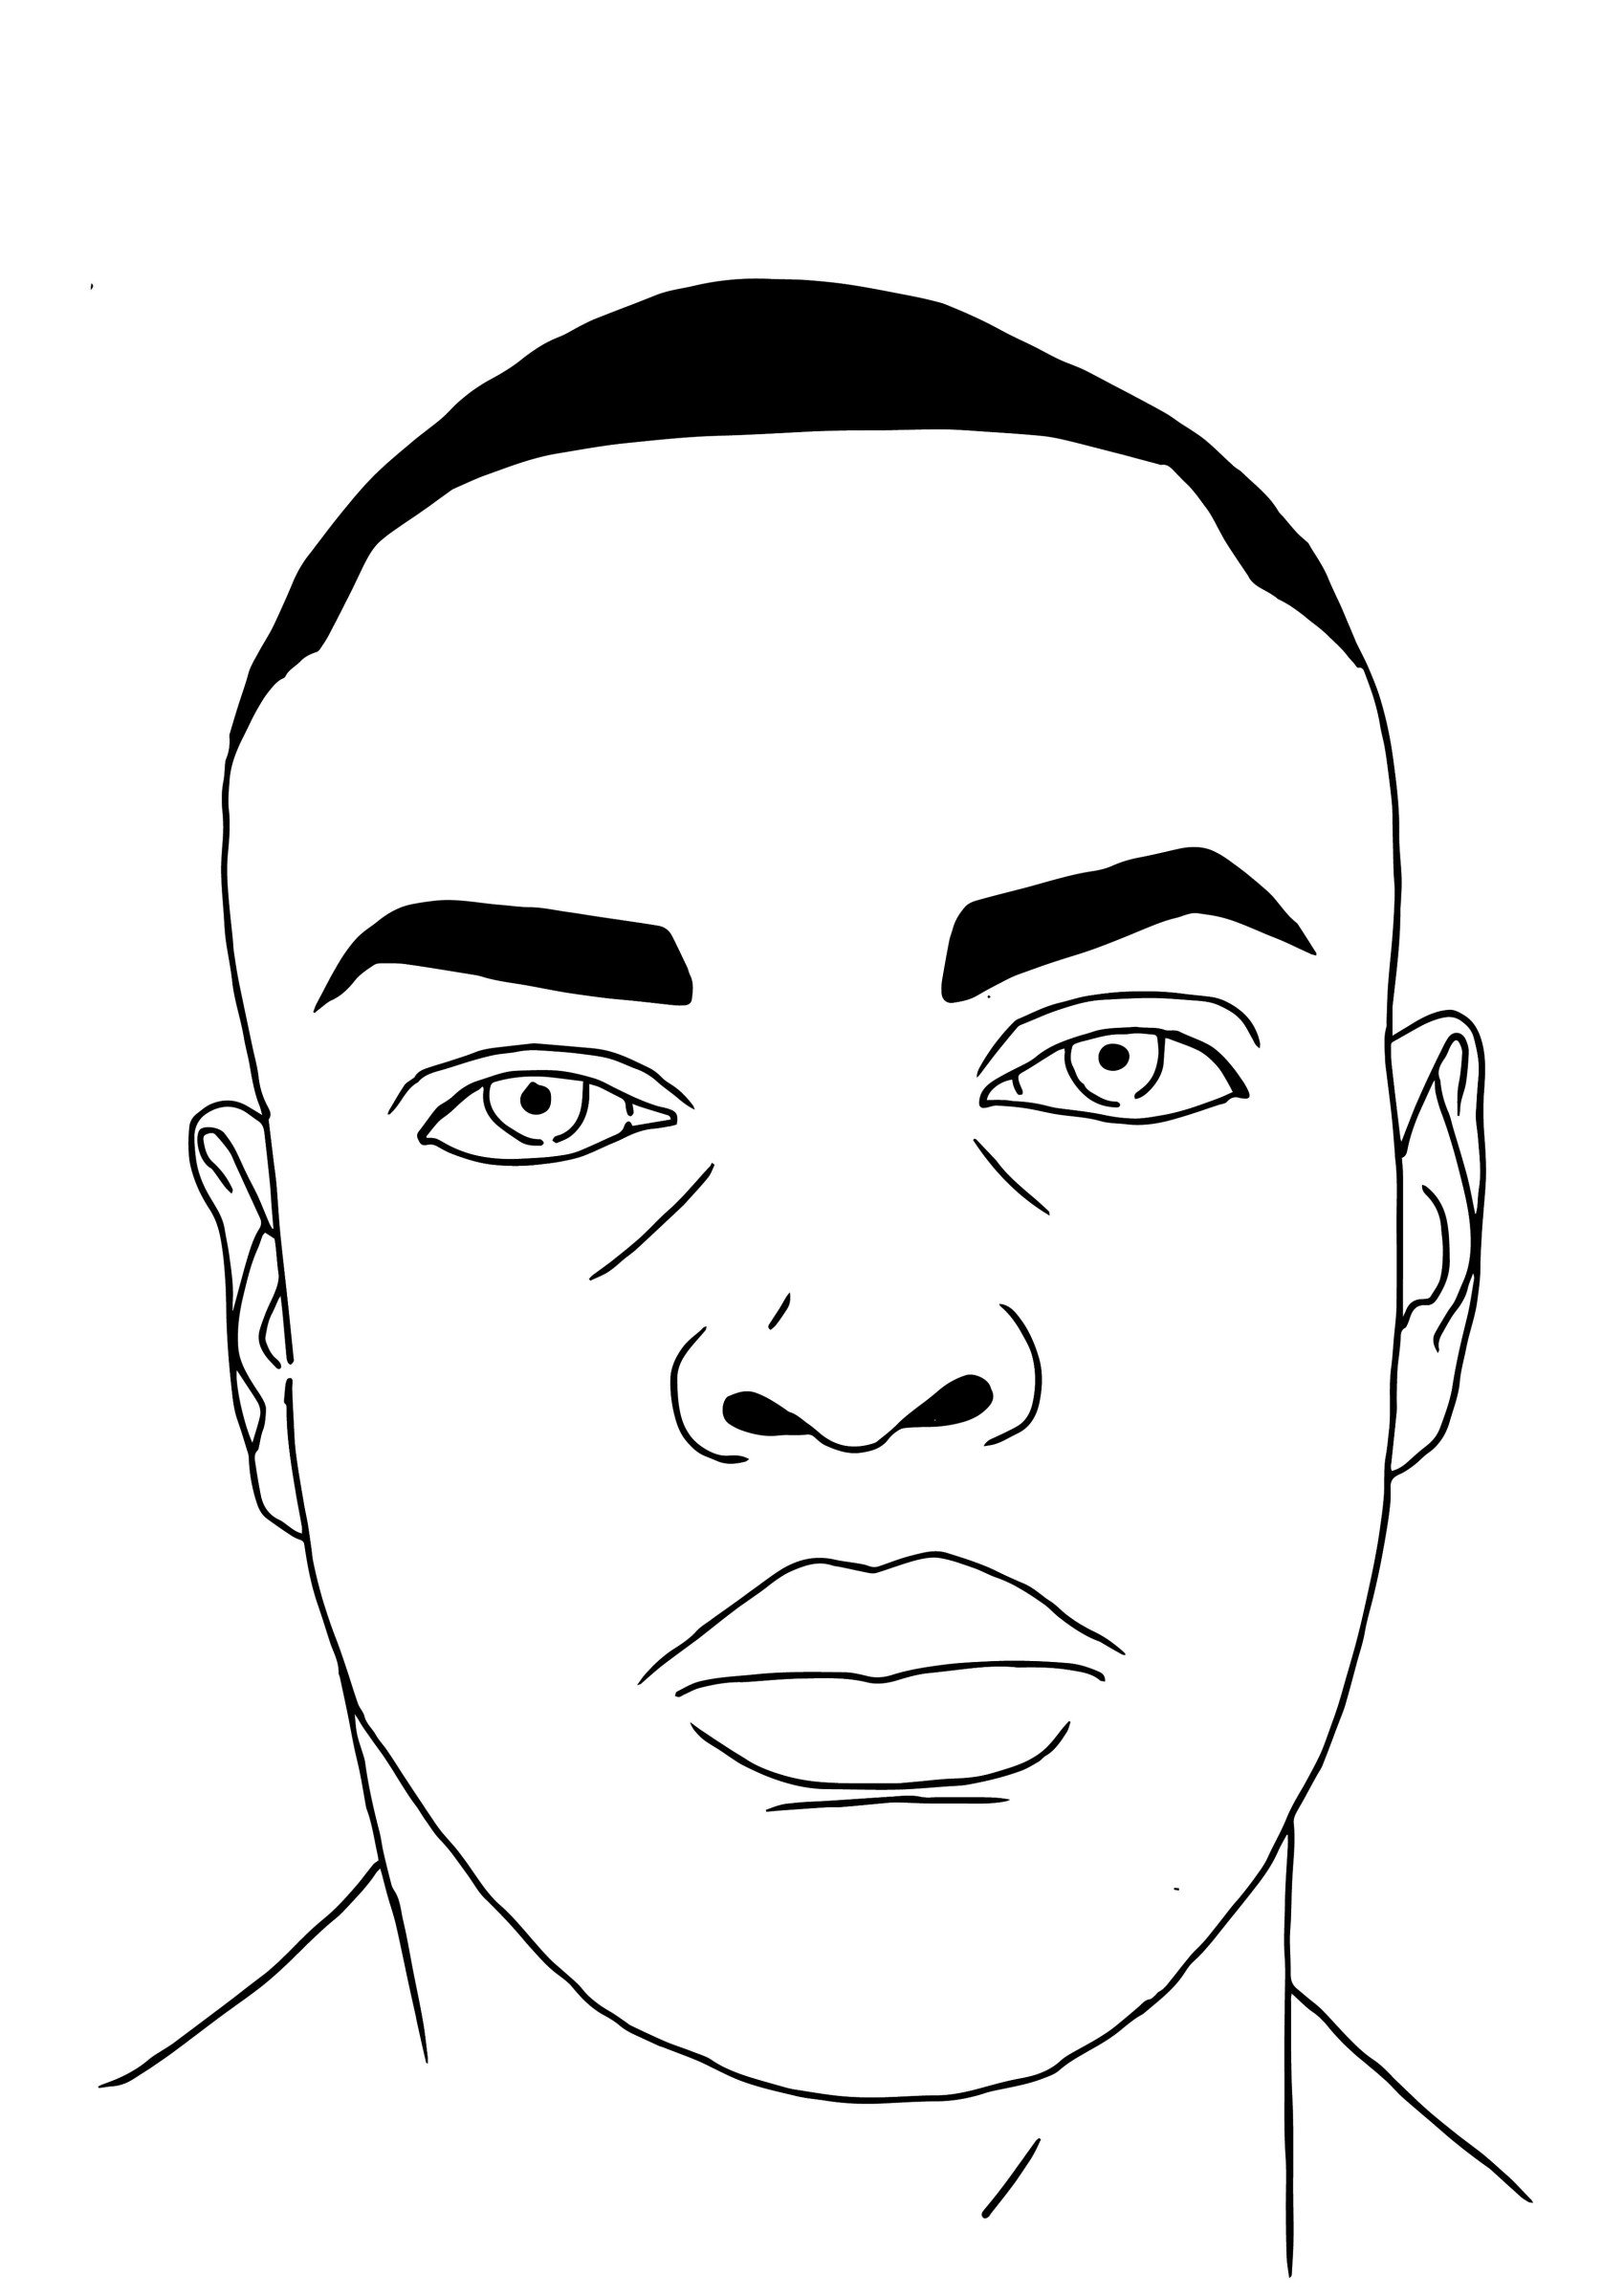 Face outline. Как нарисовать мен фейс. ЗХС фейс эскиз. Man face illustration. Plain face.